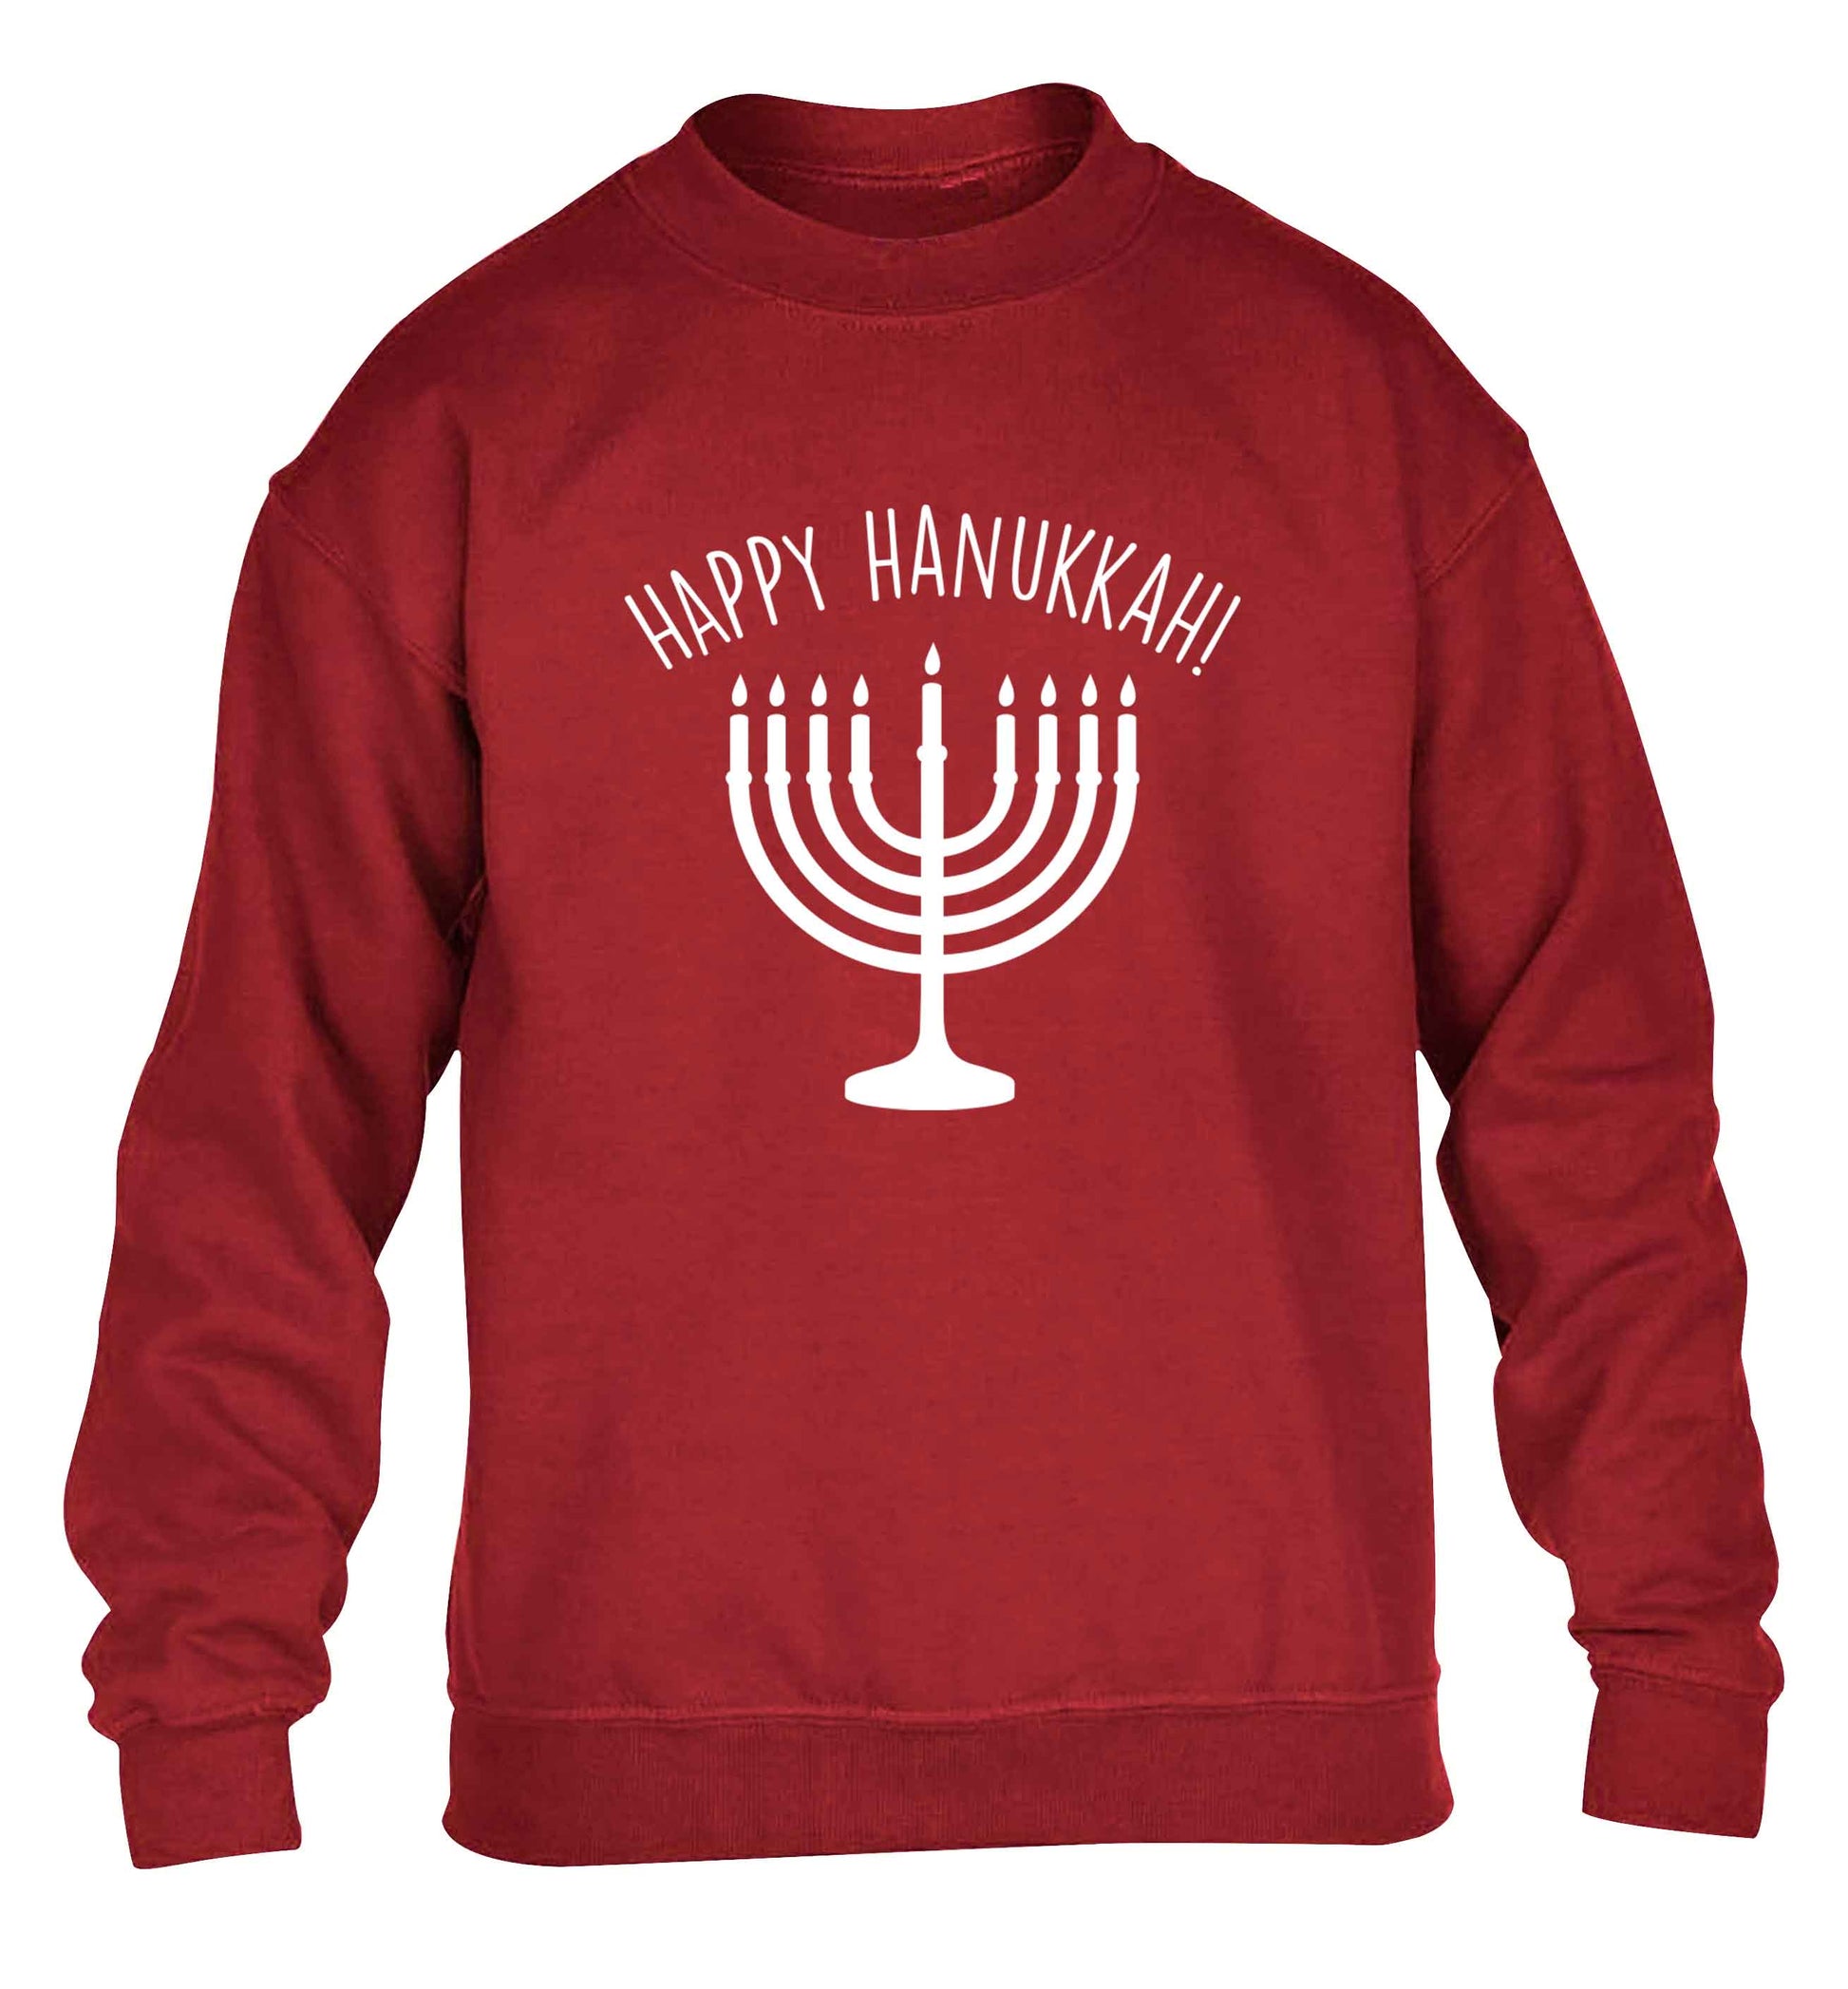 Happy hanukkah children's grey sweater 12-13 Years